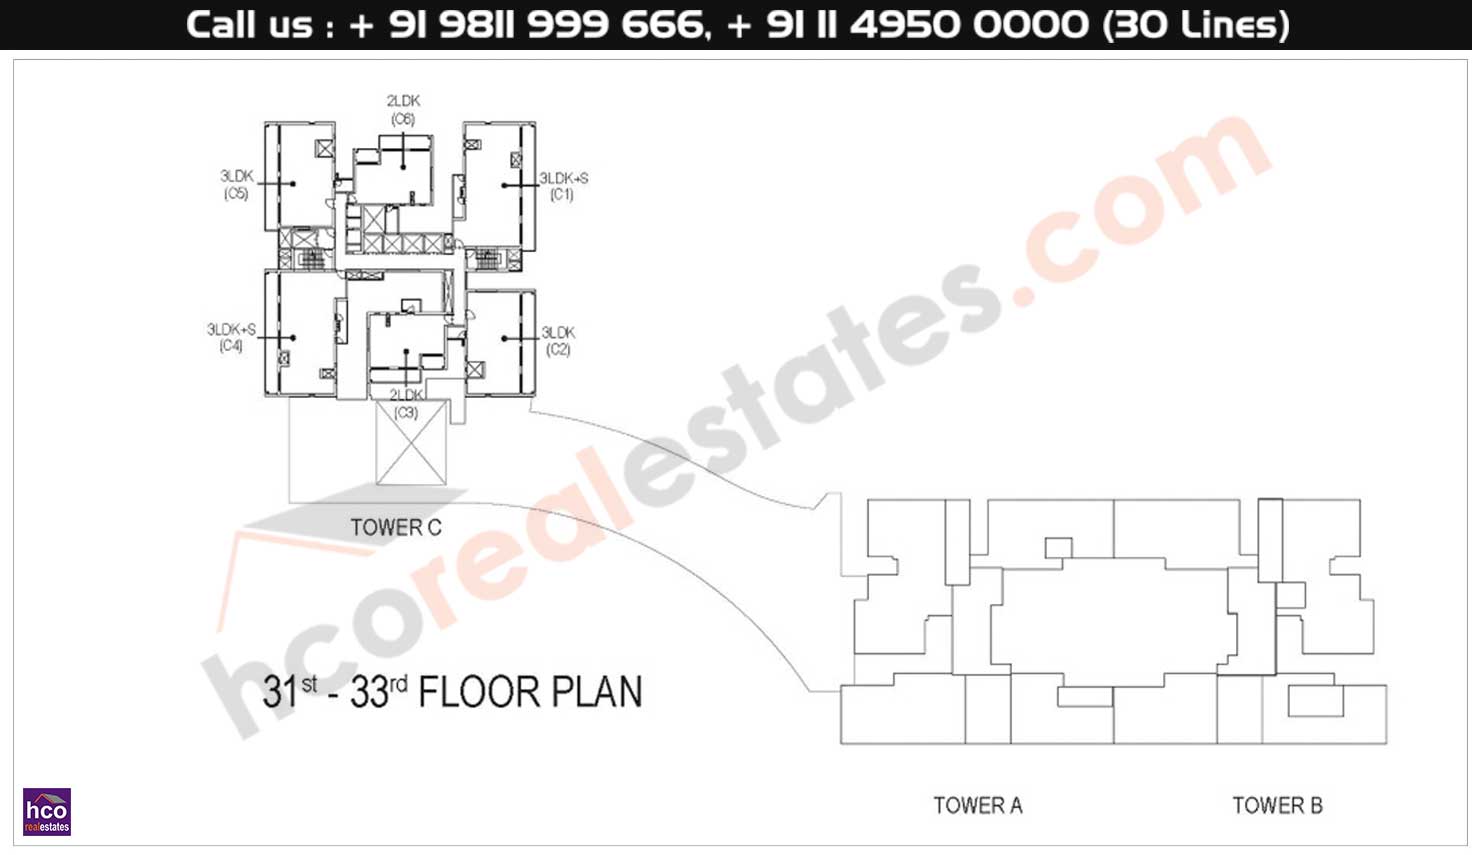 31st - 33rd Floor Plan